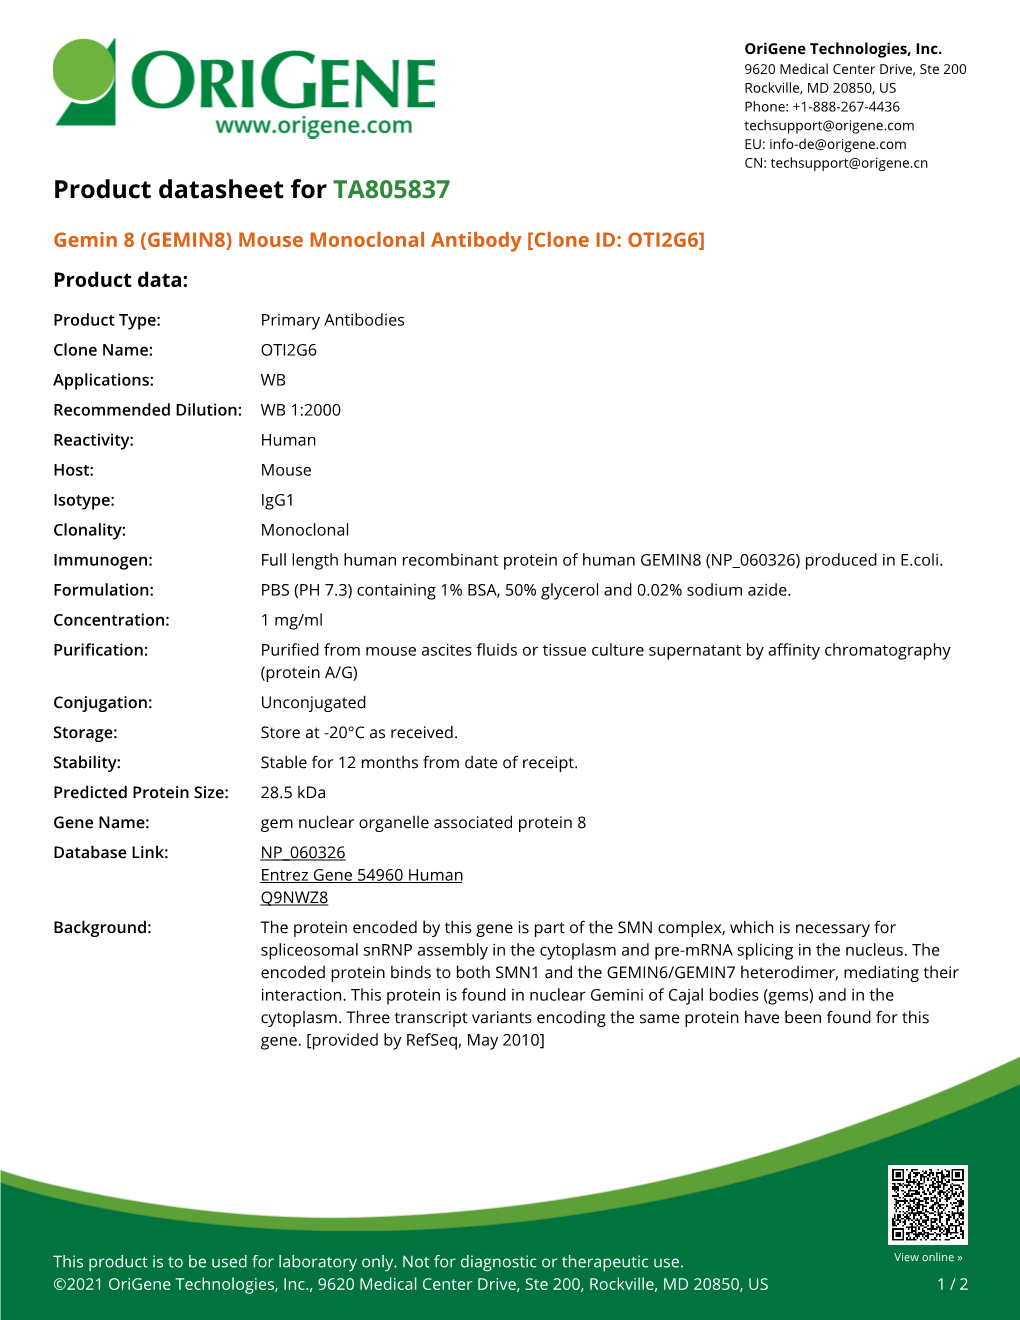 Gemin 8 (GEMIN8) Mouse Monoclonal Antibody [Clone ID: OTI2G6] Product Data